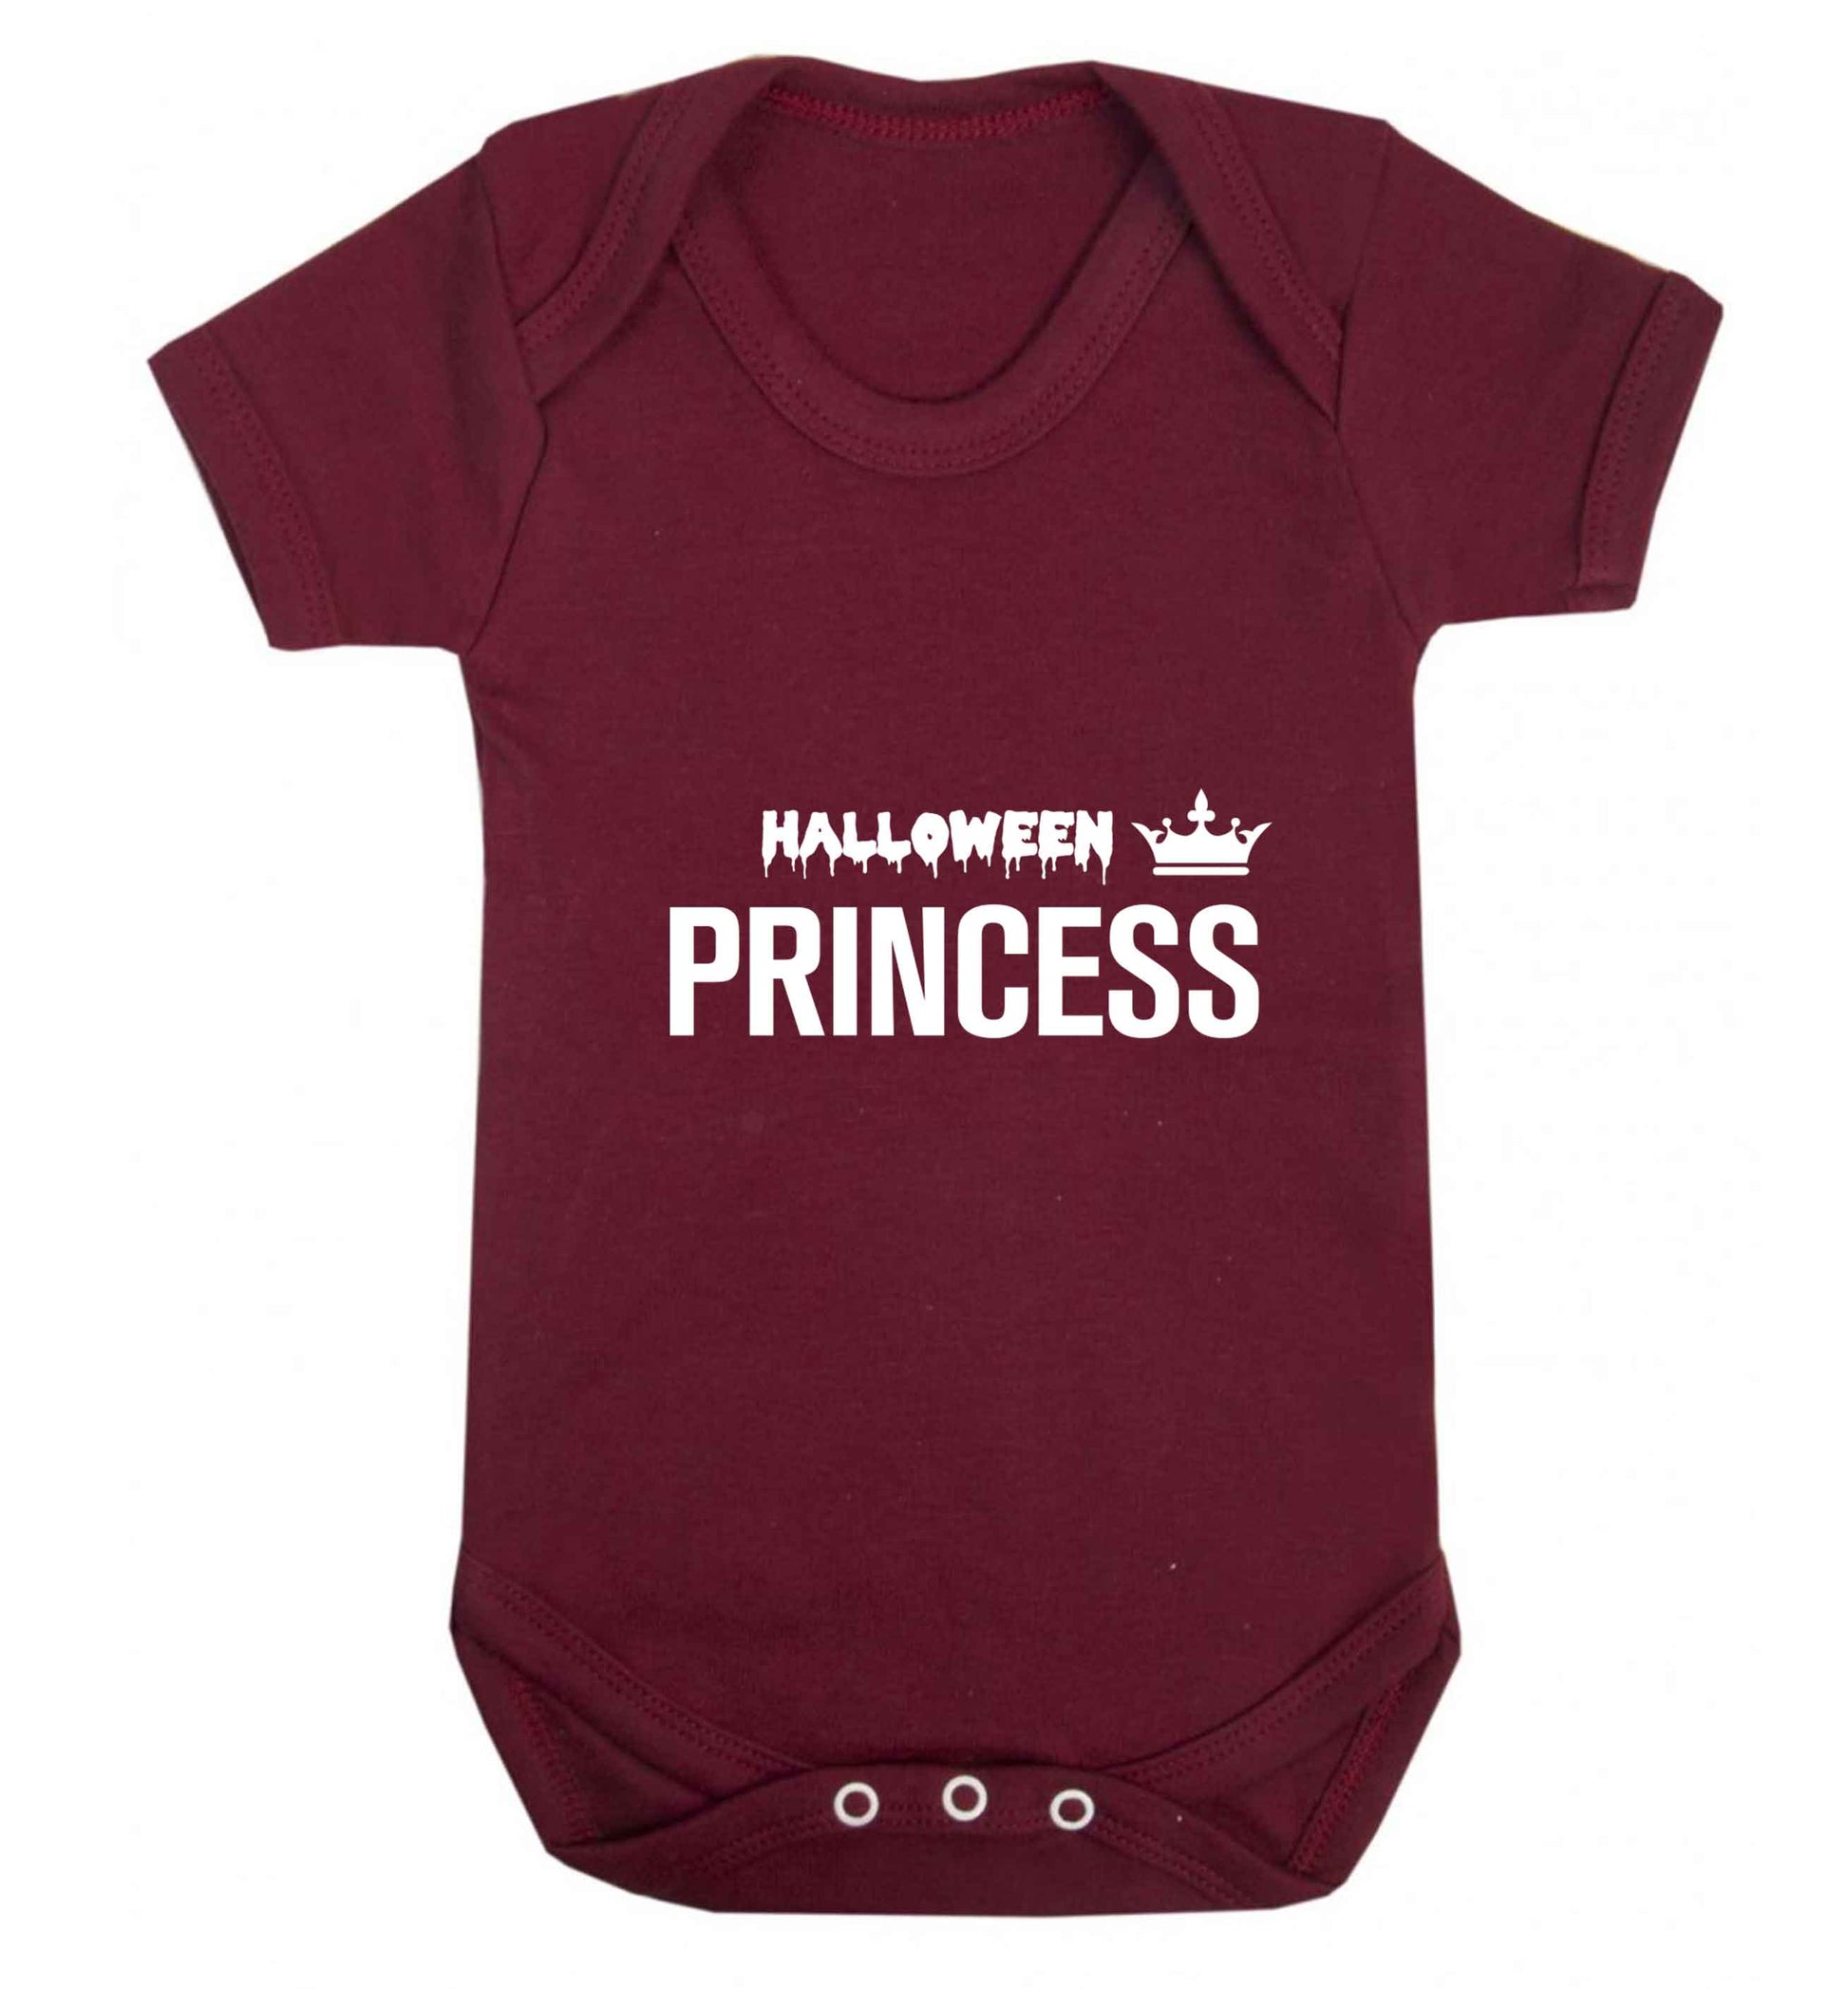 Halloween princess baby vest maroon 18-24 months